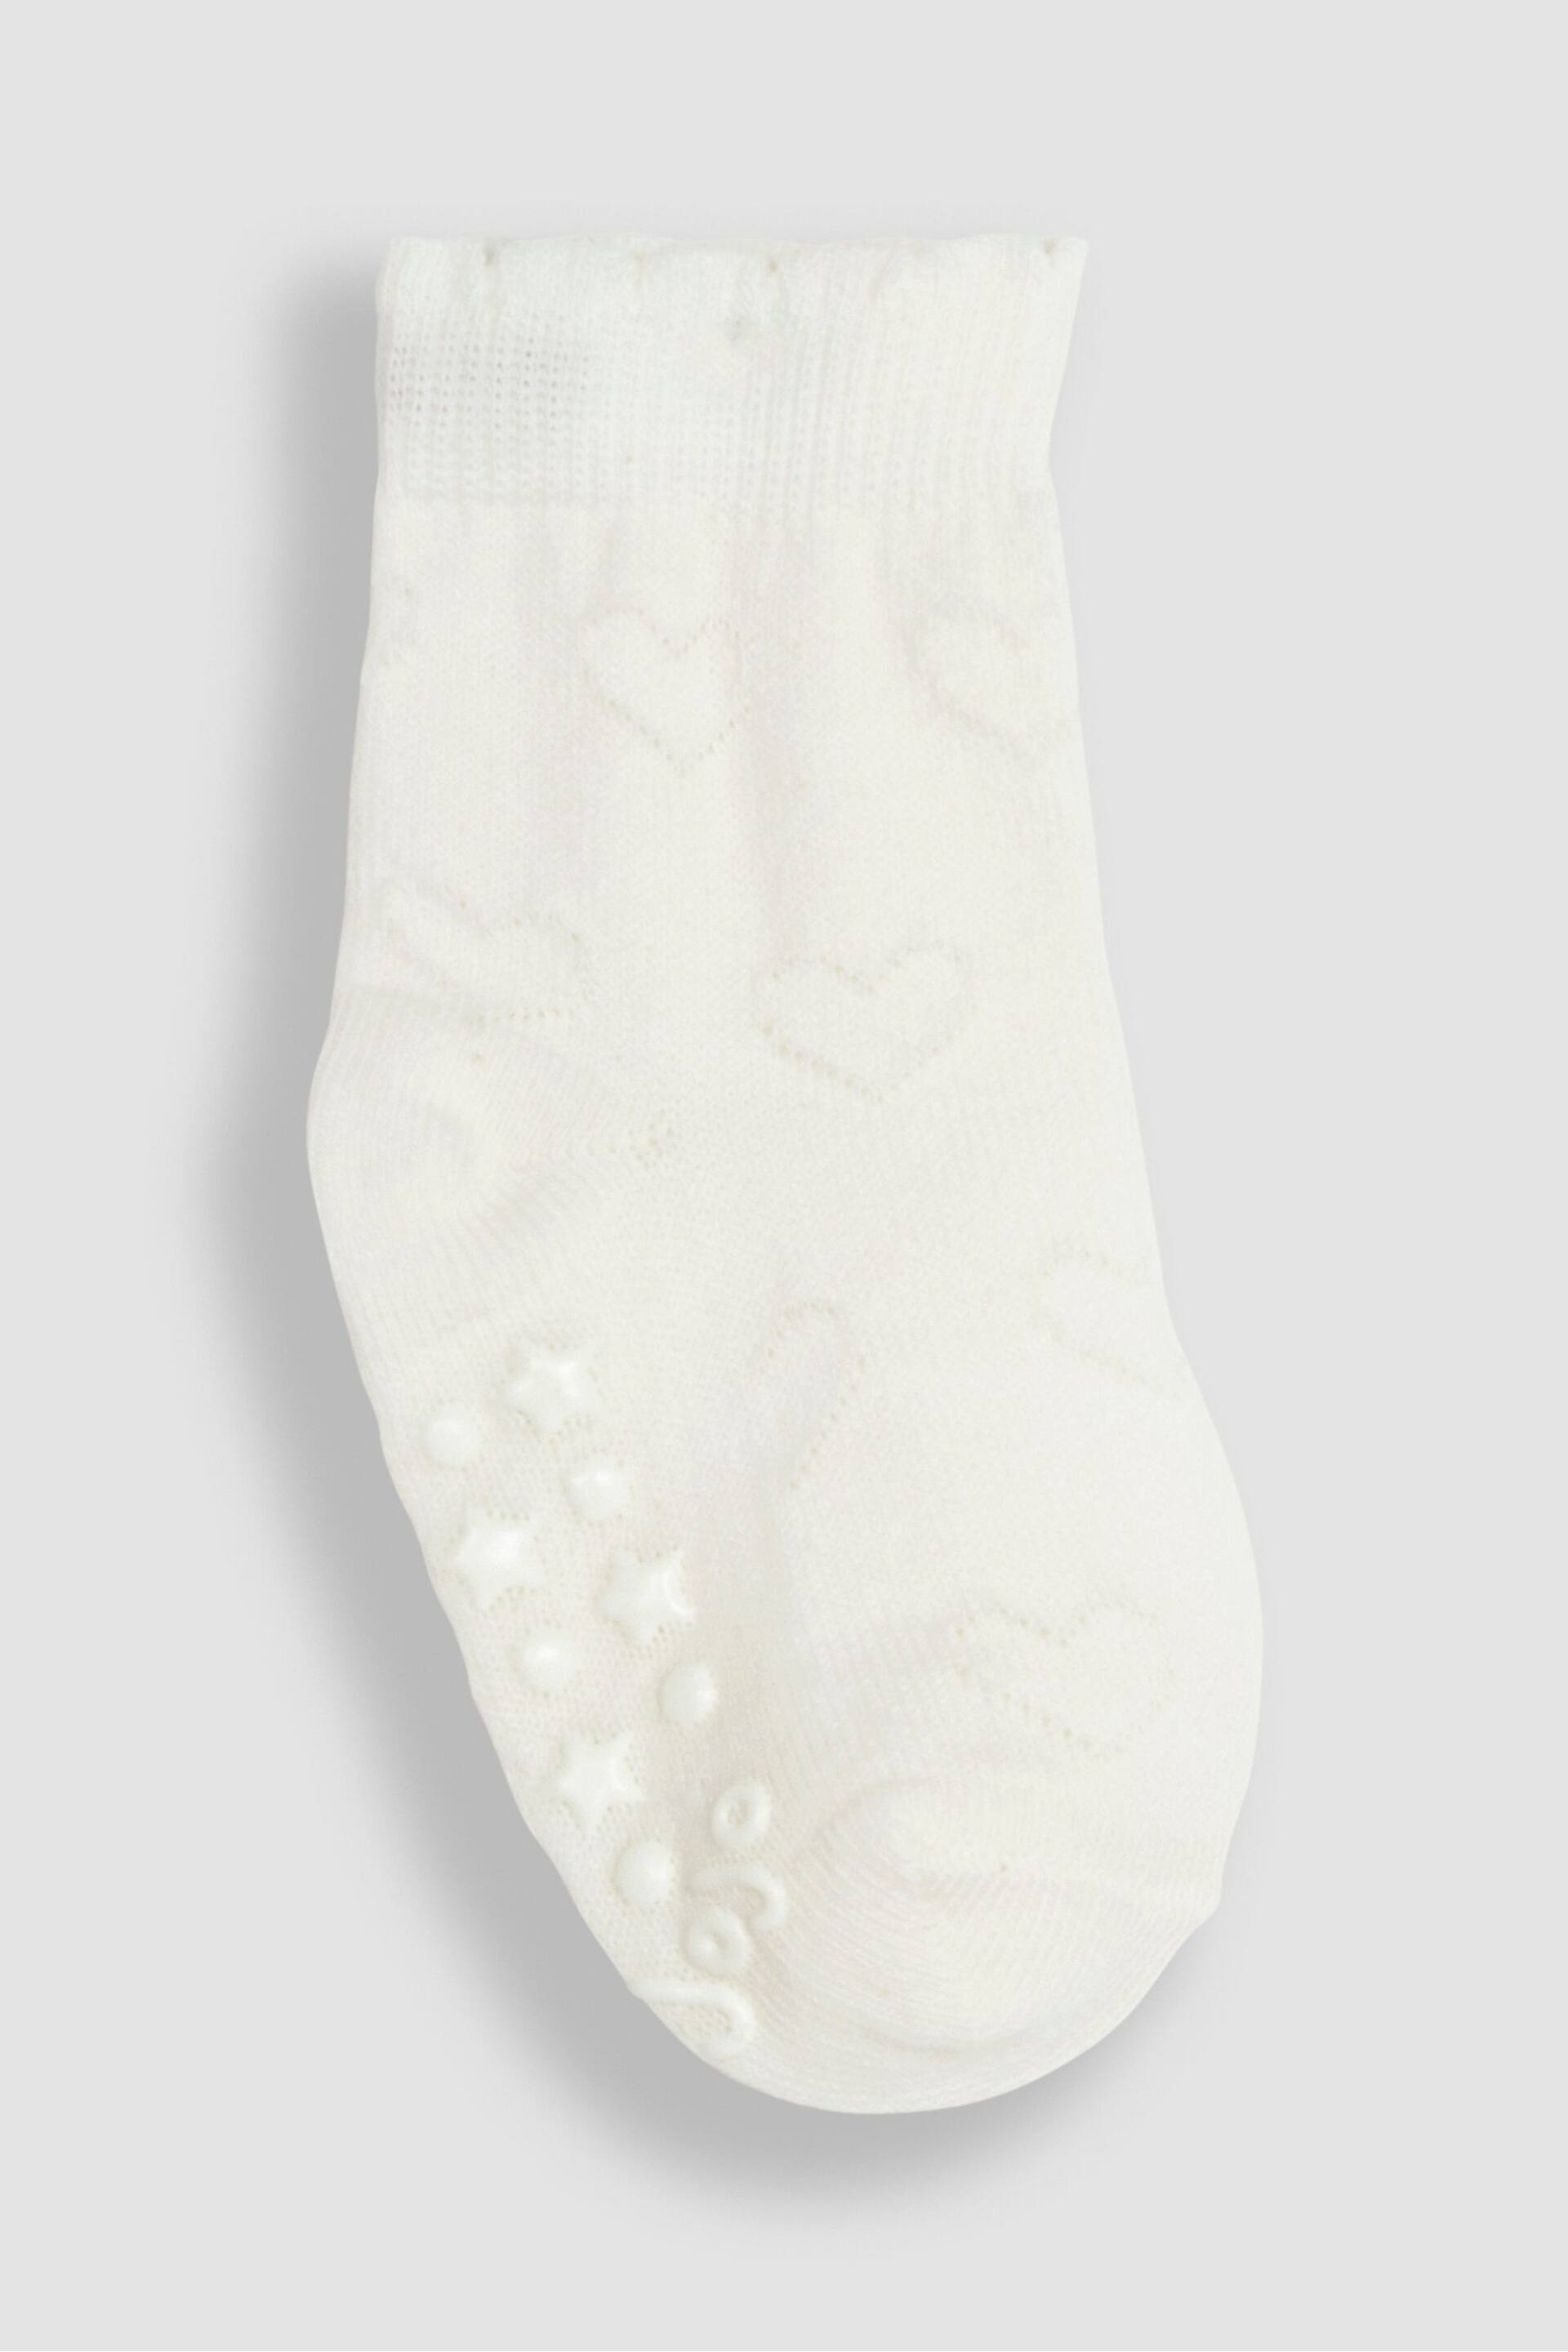 JoJo Maman Bébé Cream 3-Pack Heart Socks - Image 4 of 4